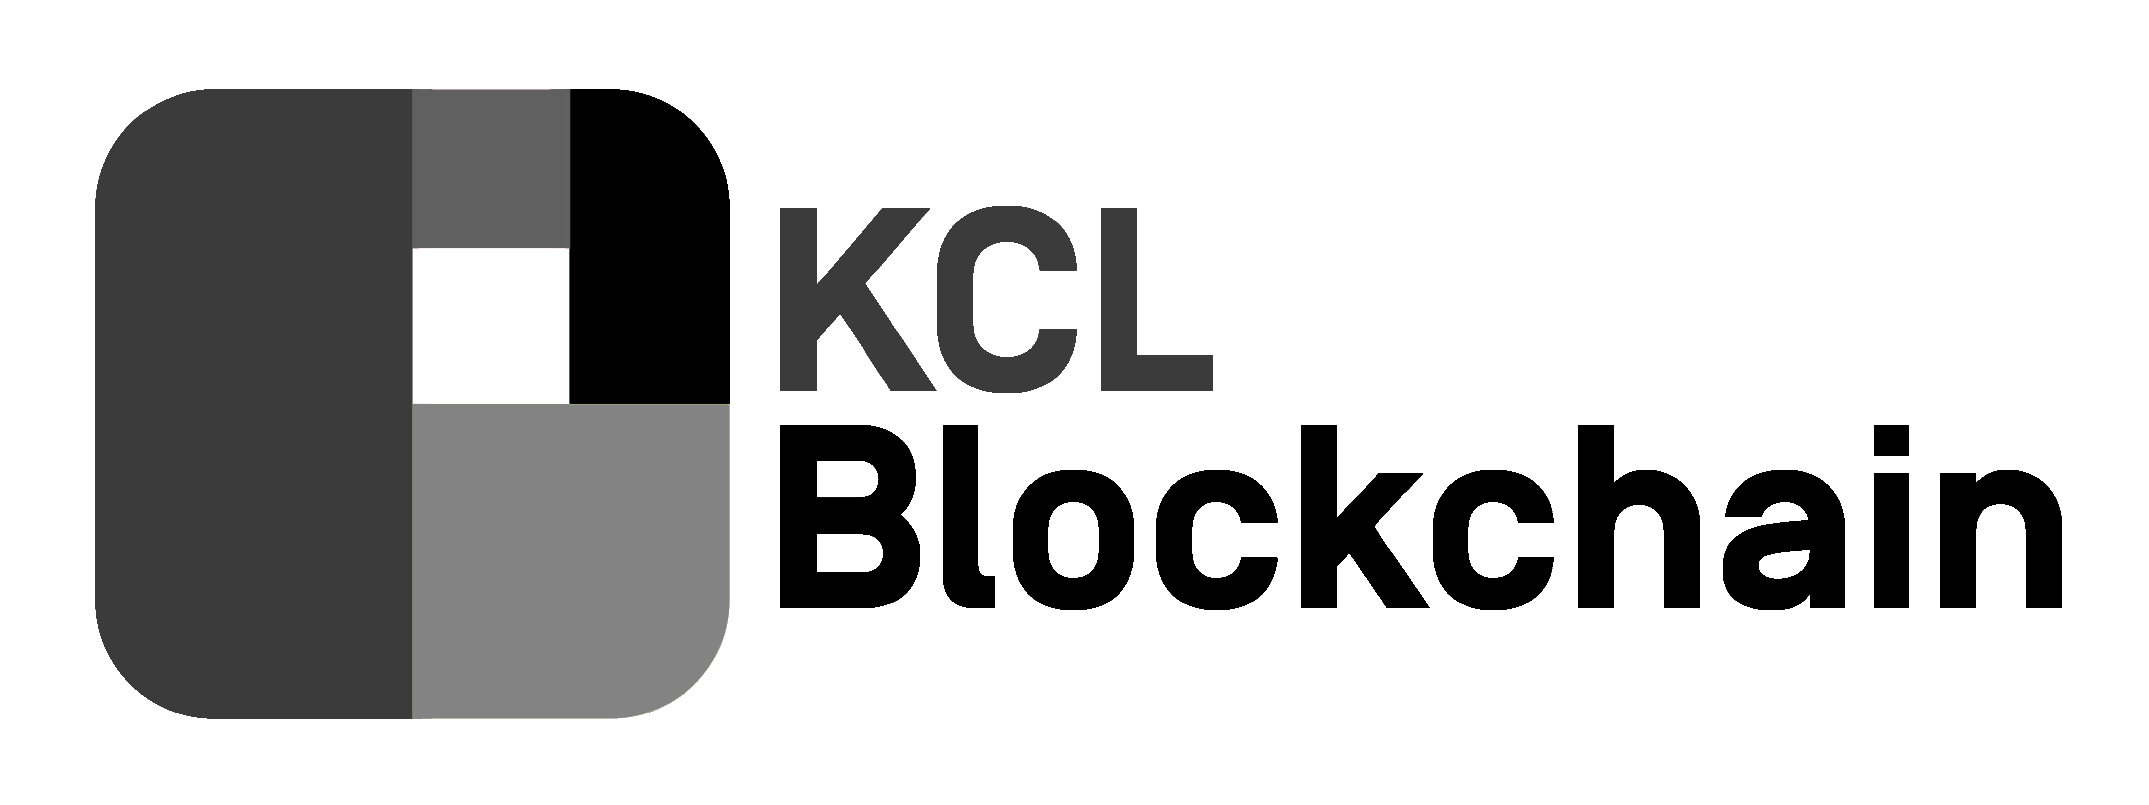 kcl blockchain soc logo.png